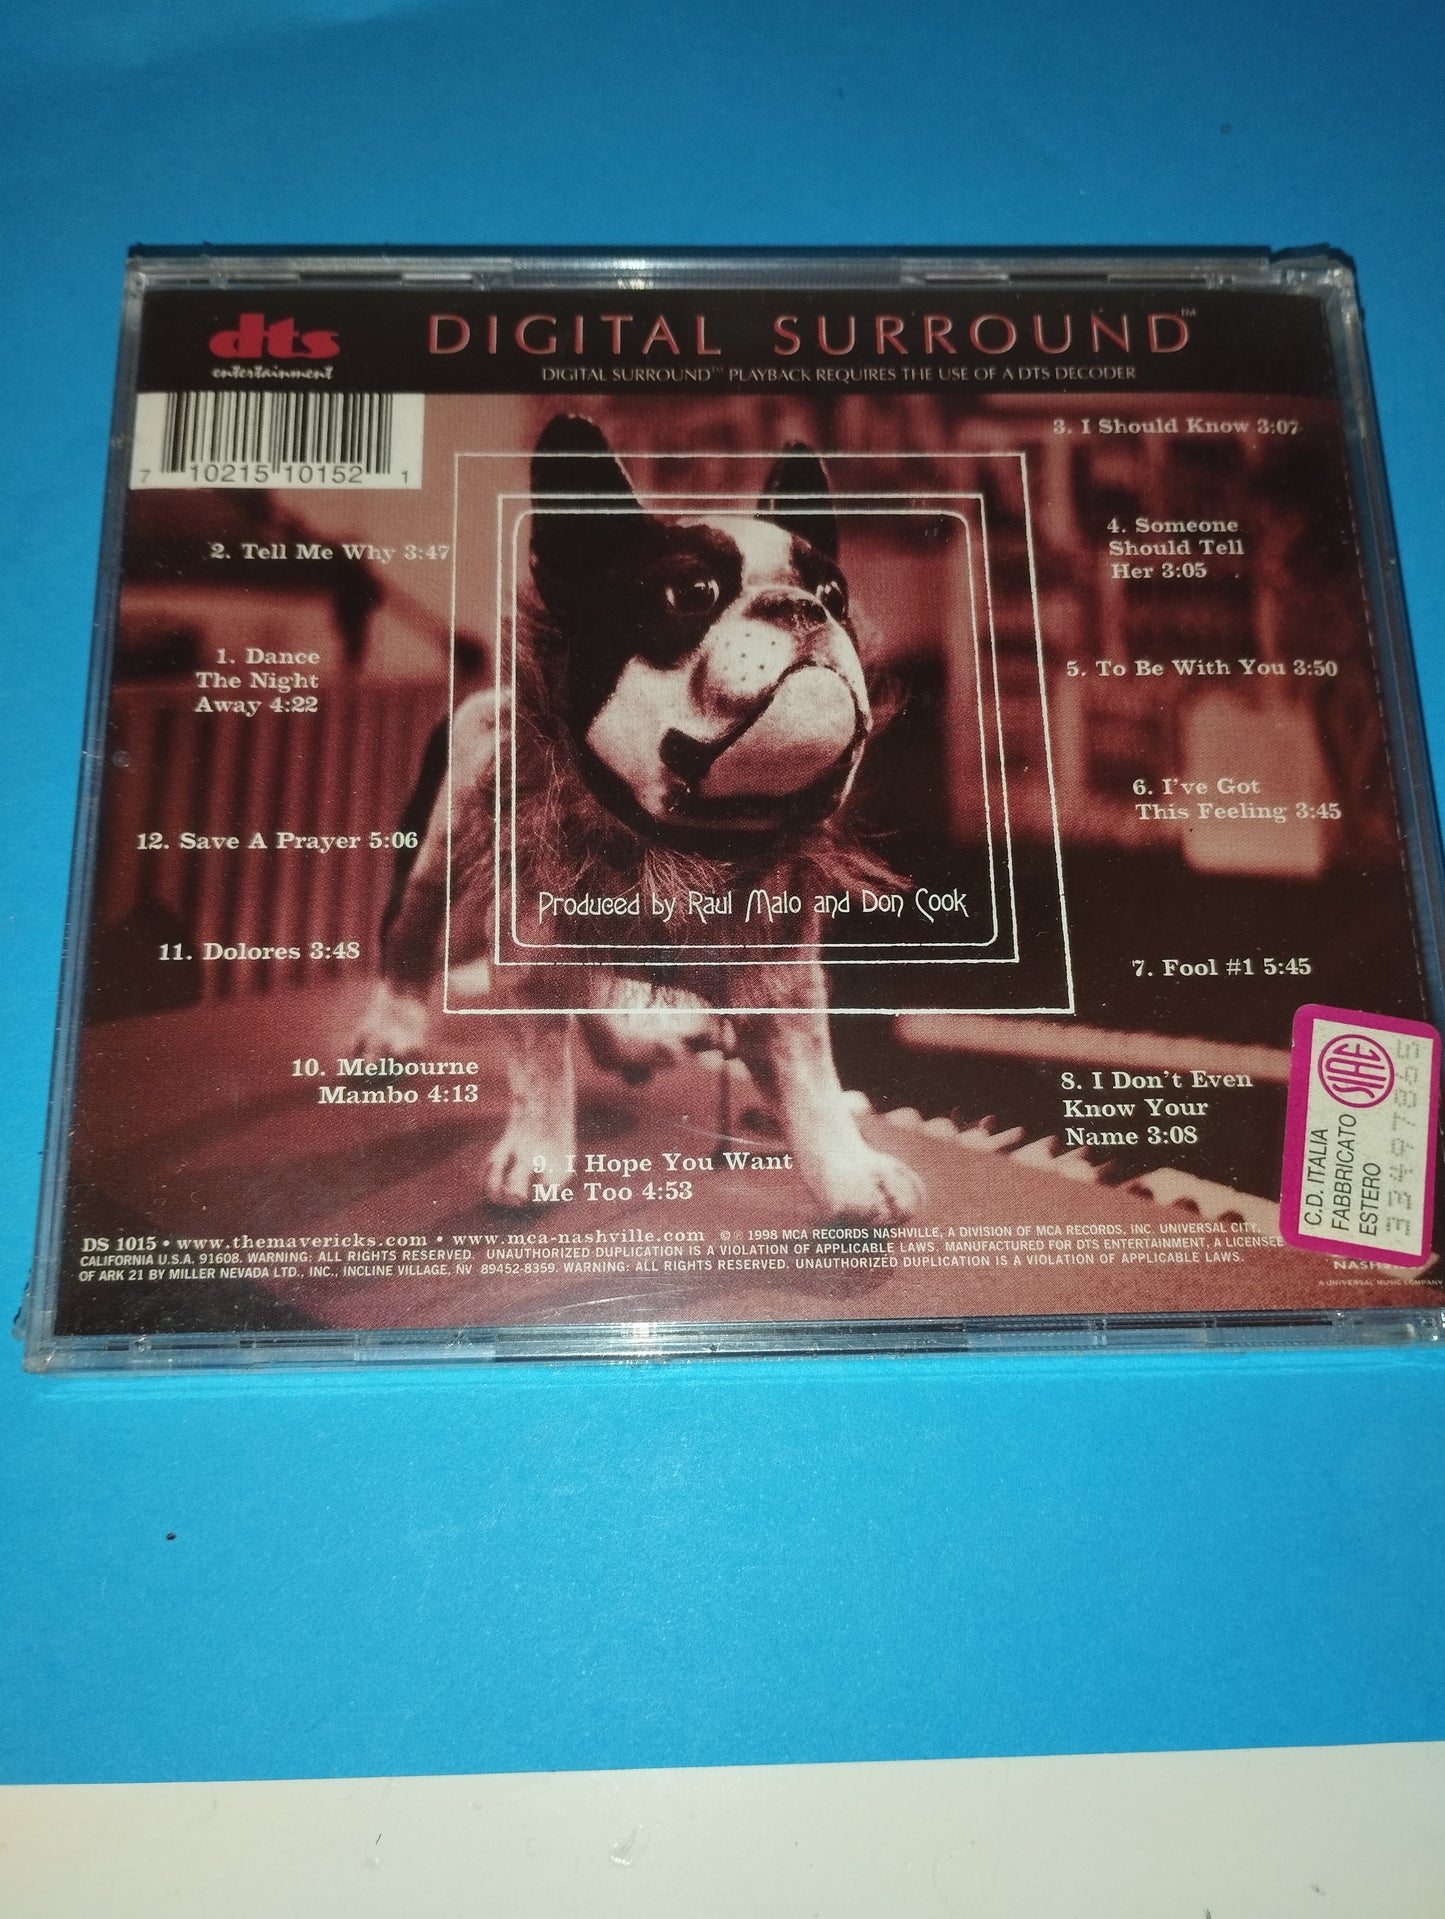 Trampoline" The Mavericks CD dts Digital Surround